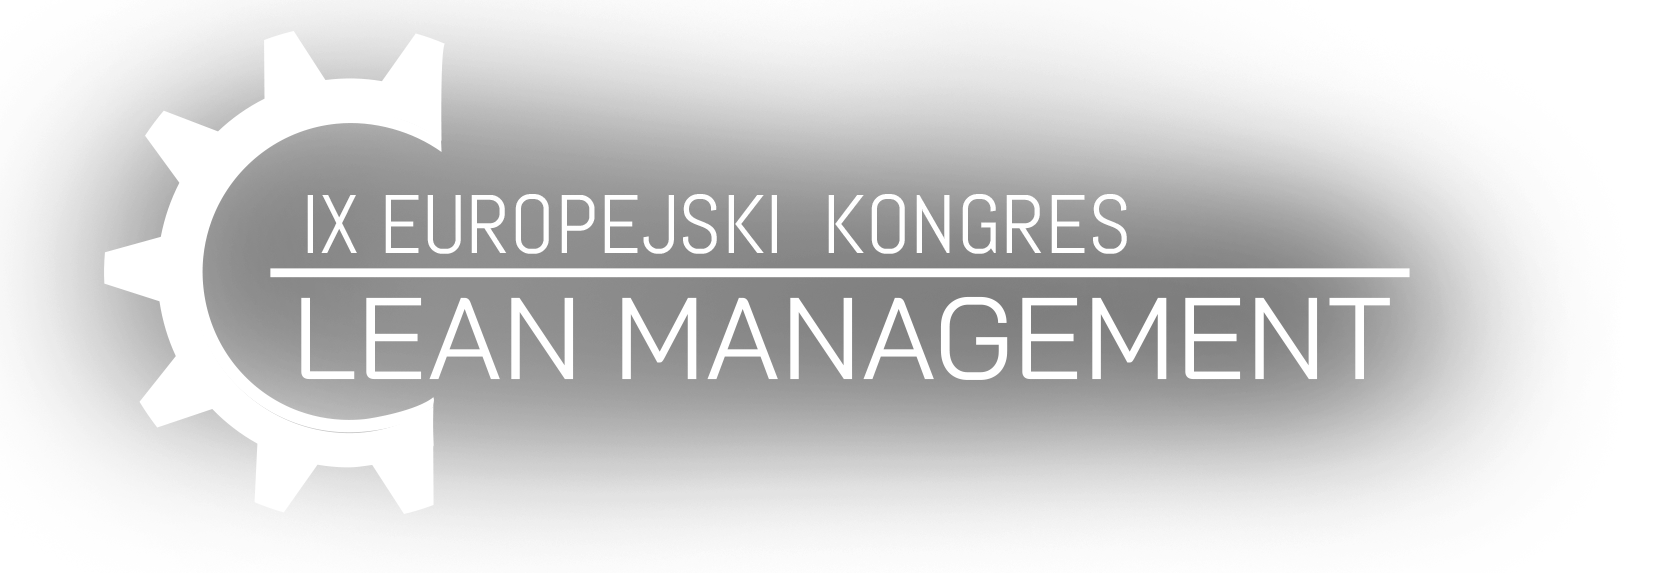 Logo_IX_kongres_lean